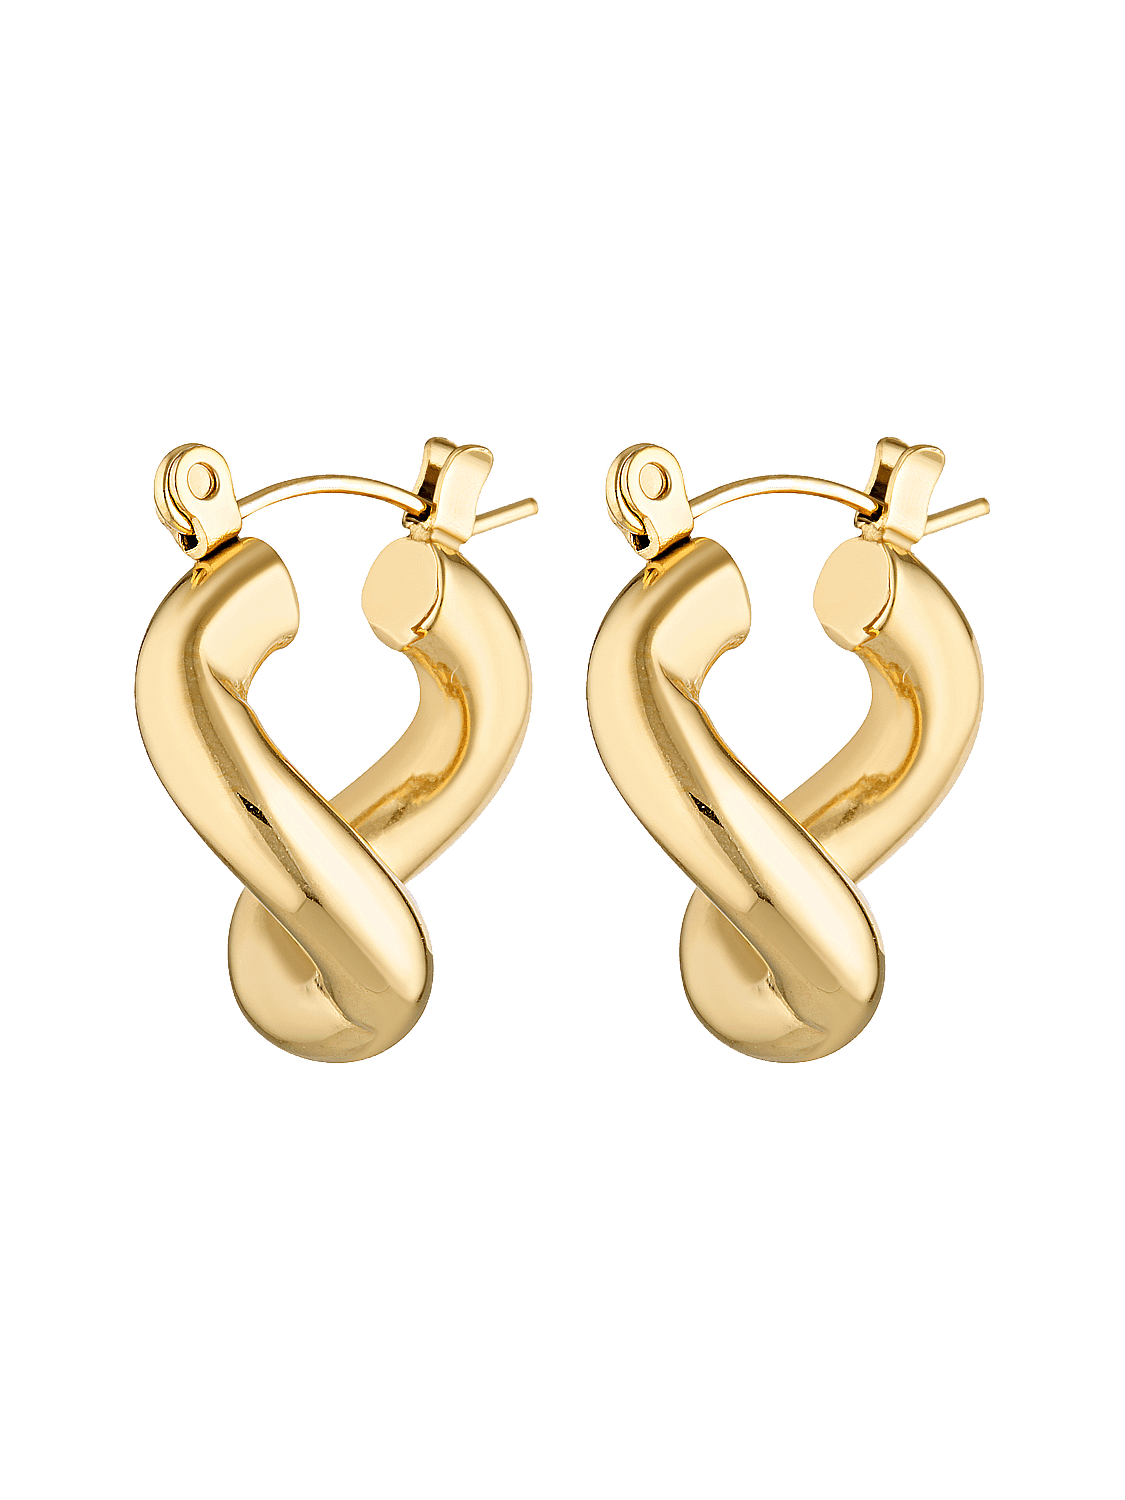 Wavy design 18k gold filled earring